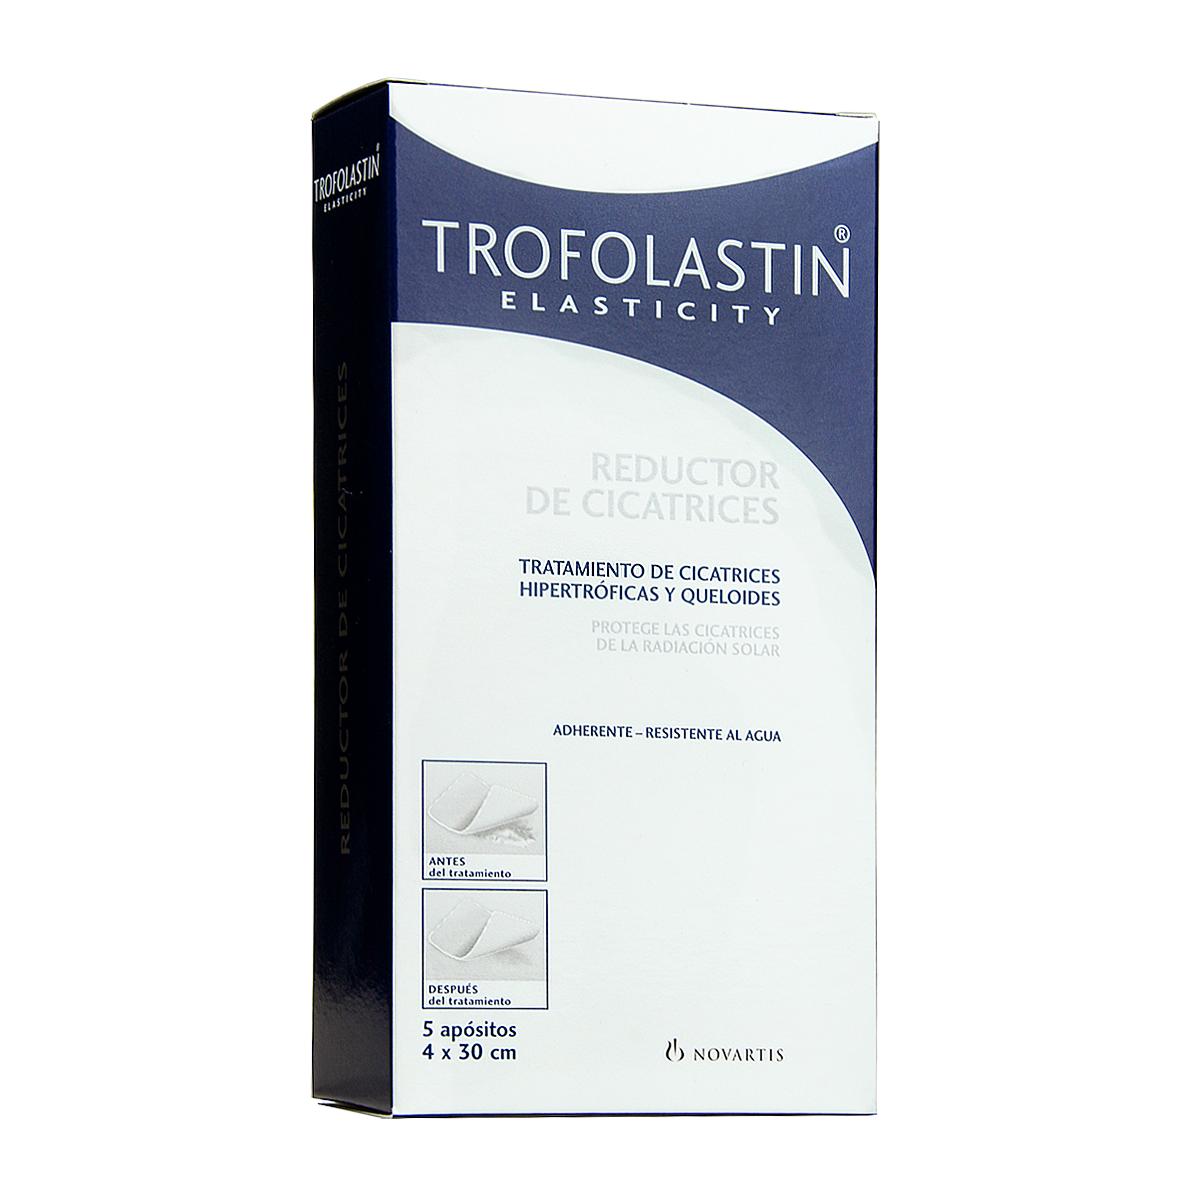 Trofolastin - Trofolastin reductor de cicatrices 5 apósitos de 4x30cm